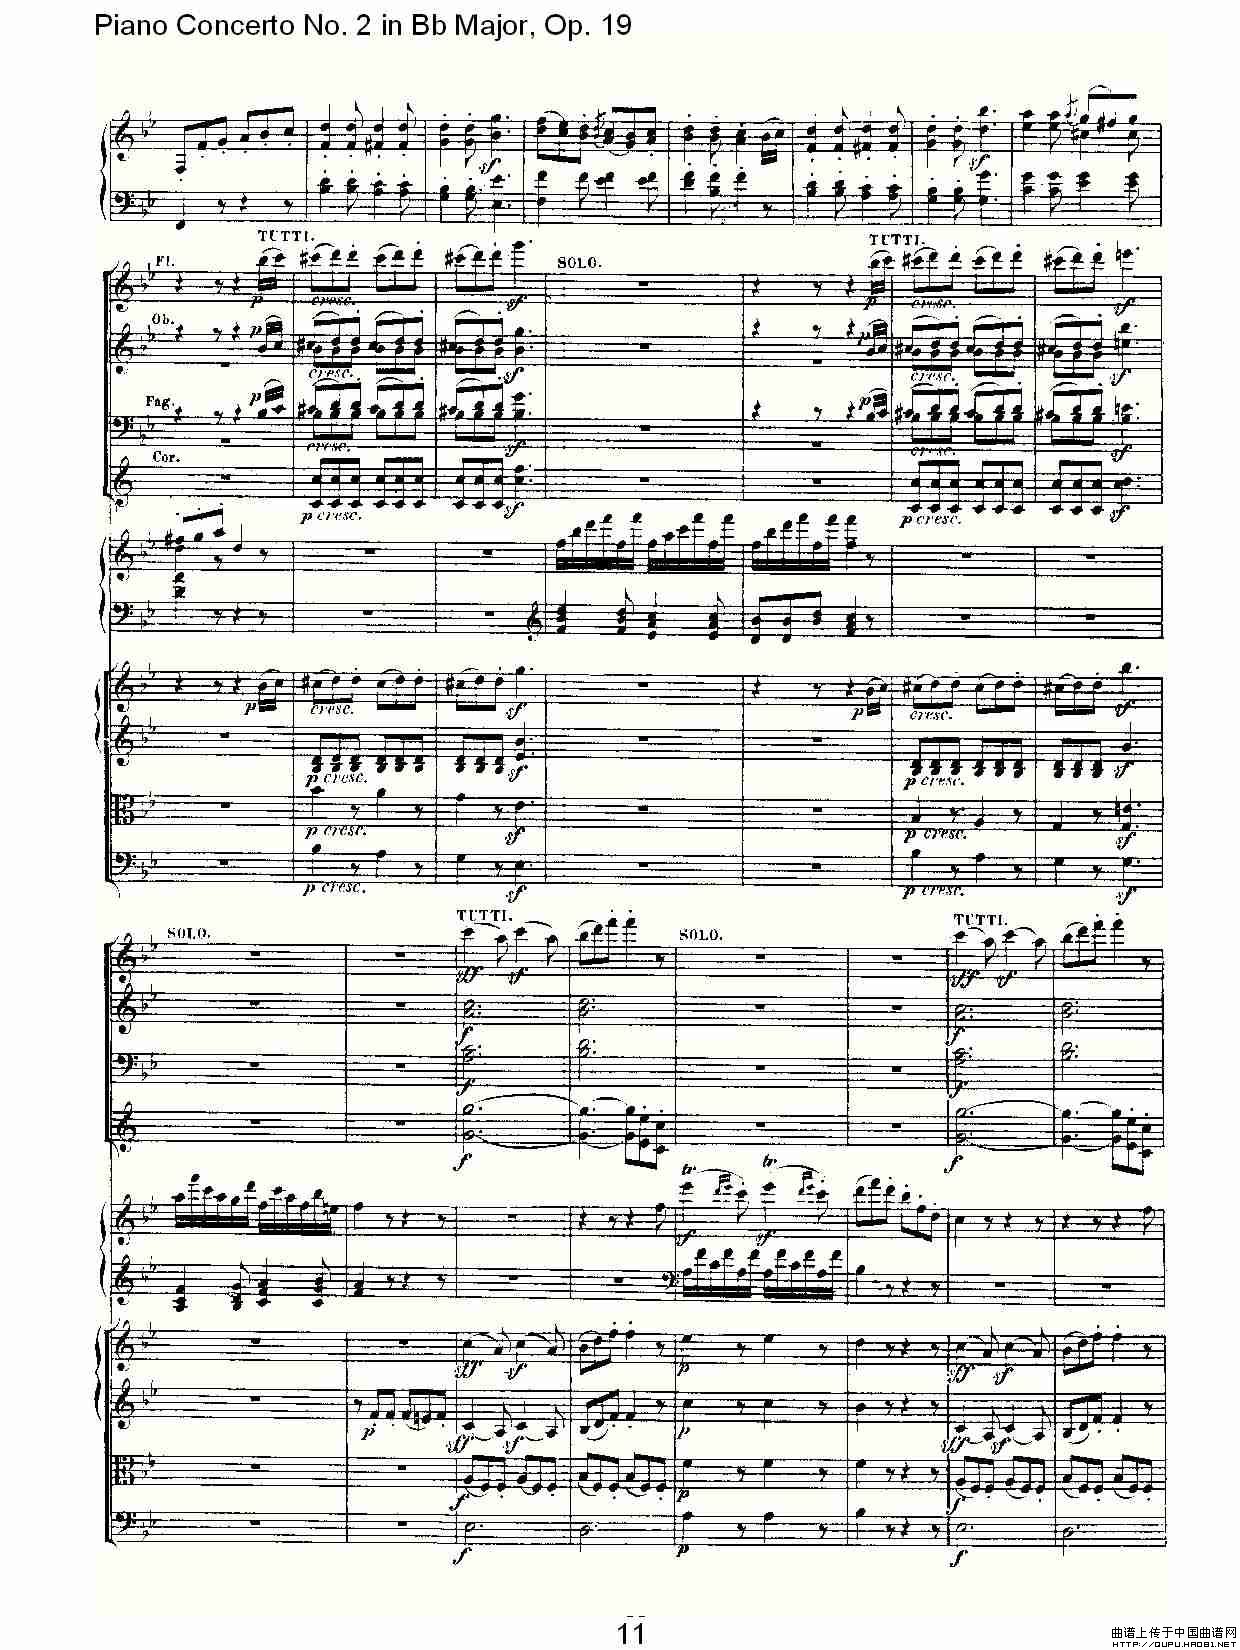 Bb大调钢琴第二协奏曲 Op. 19 第三乐章